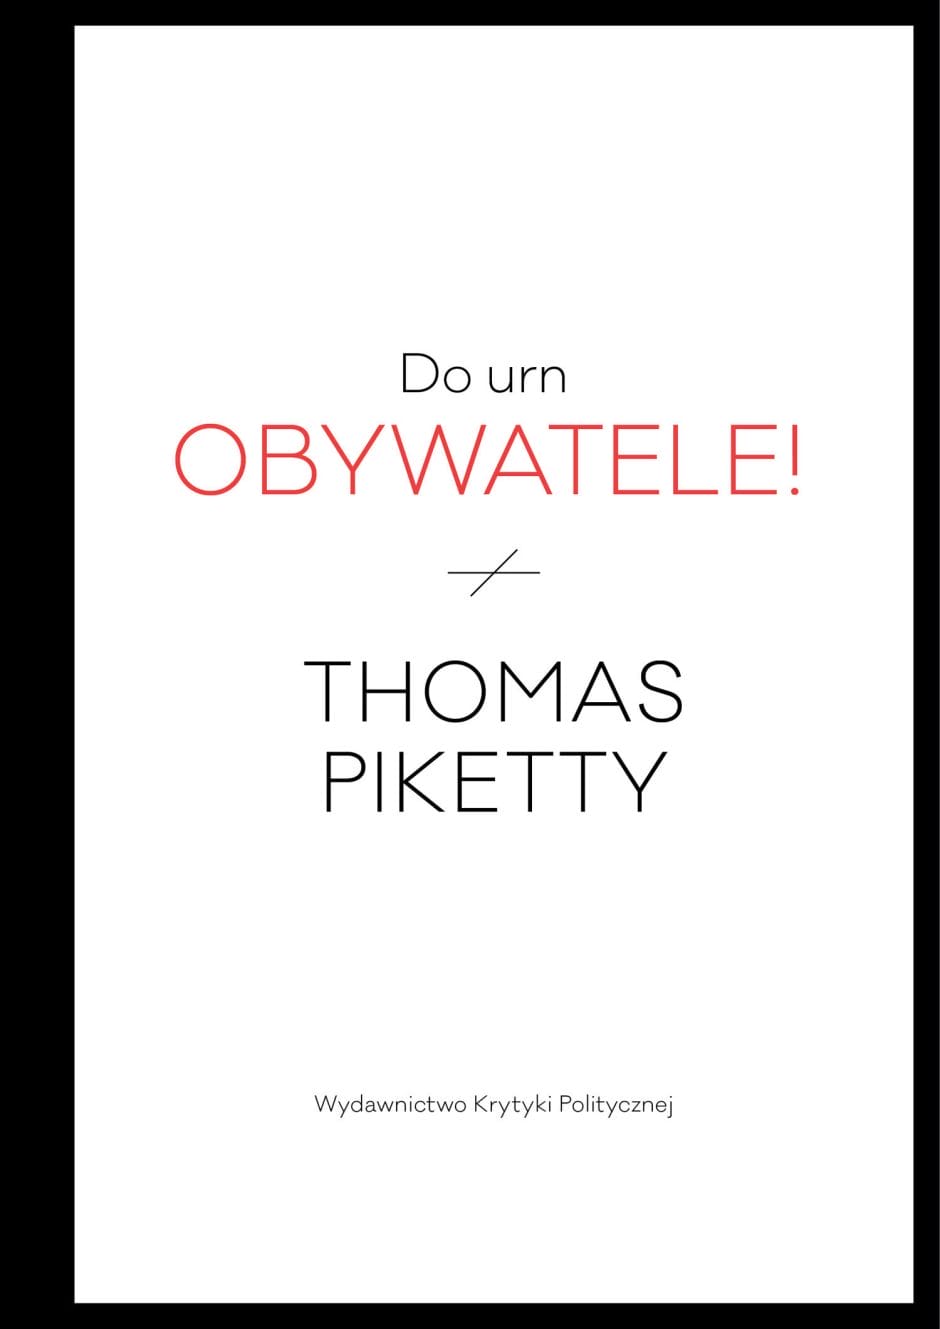 Thomas Piketty: Do urn, obywatele!